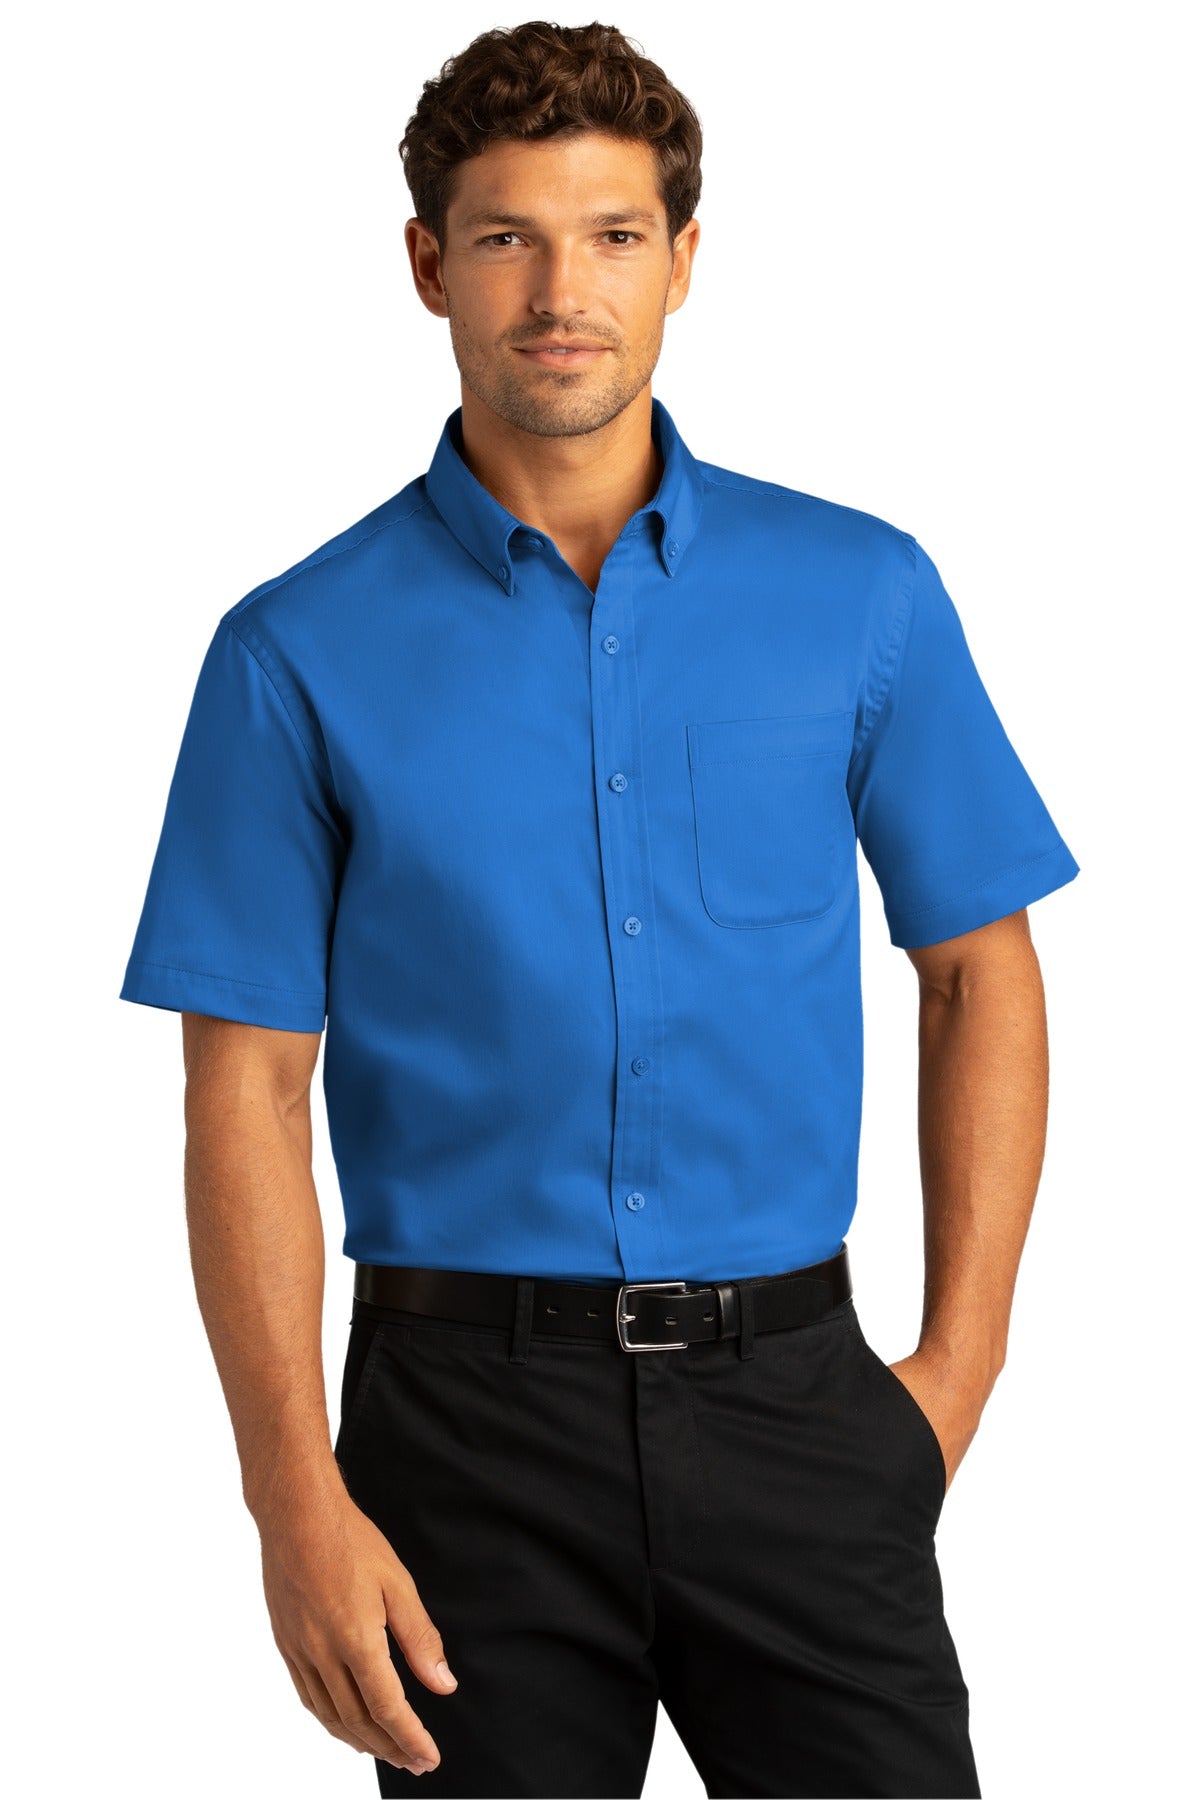 Port Authority® Short Sleeve SuperPro React™ Twill Shirt. W809 [Strong Blue] - DFW Impression